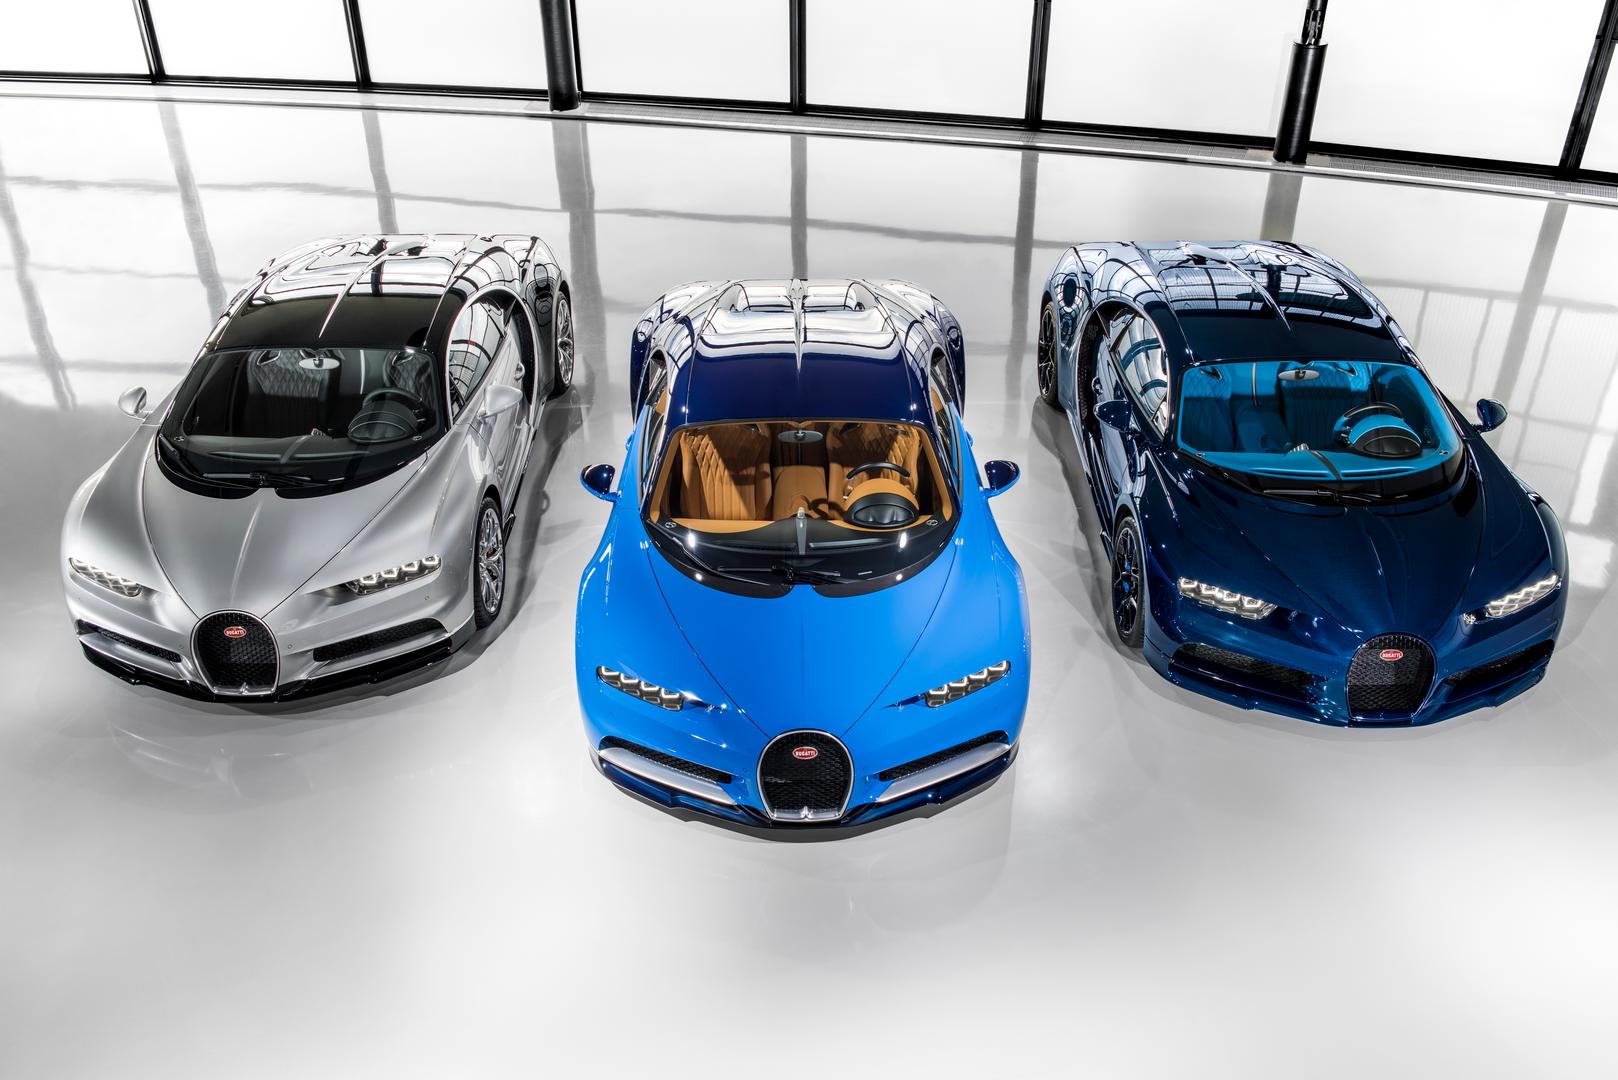 Только 40 Bugatti Chiron будет произведено